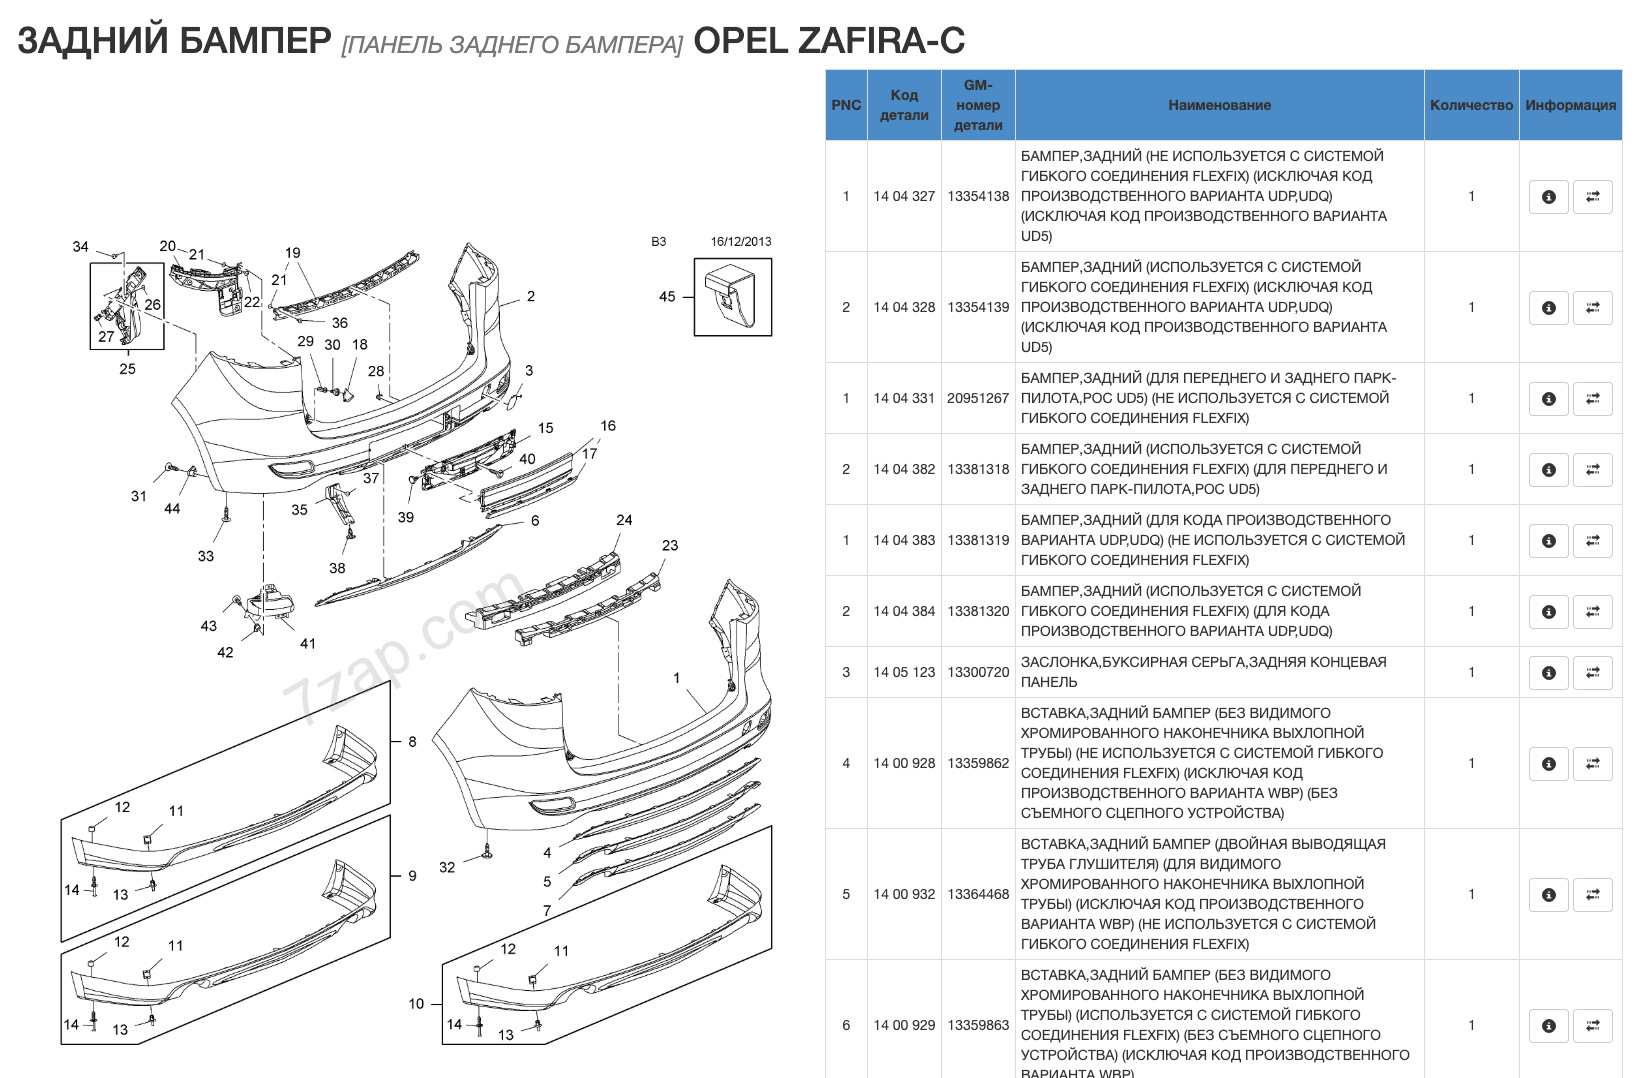 Бампер задний зафира б. Передний бампер Opel Opel Zafira b схема. Opel Zafira-b схема бампера. Схема крепления переднего бампера Опель Зафира. Детали крепления переднего бампера Опель Зафира б.